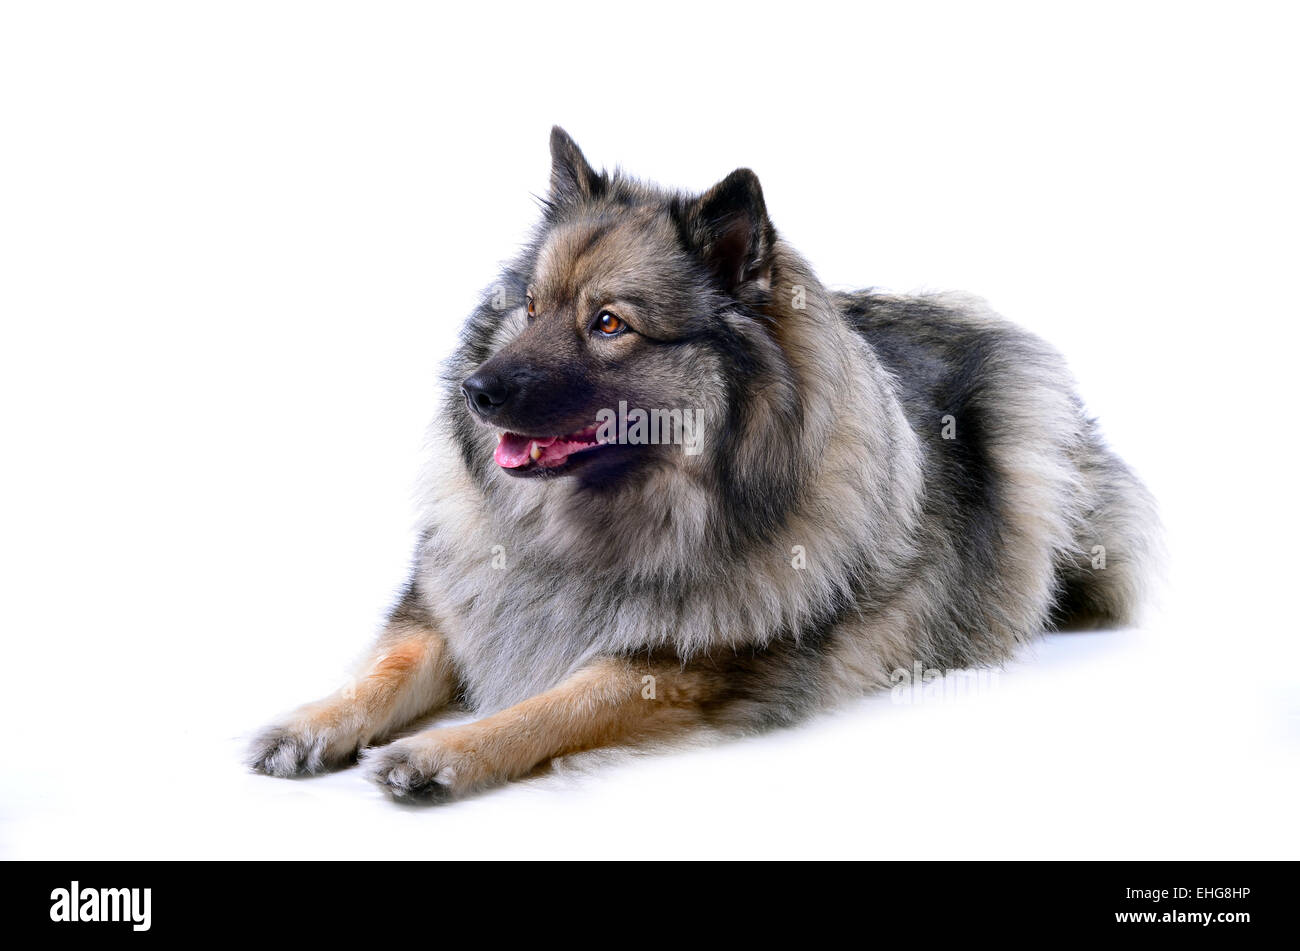 Keeshond dog portrait photography studio Stock Photo